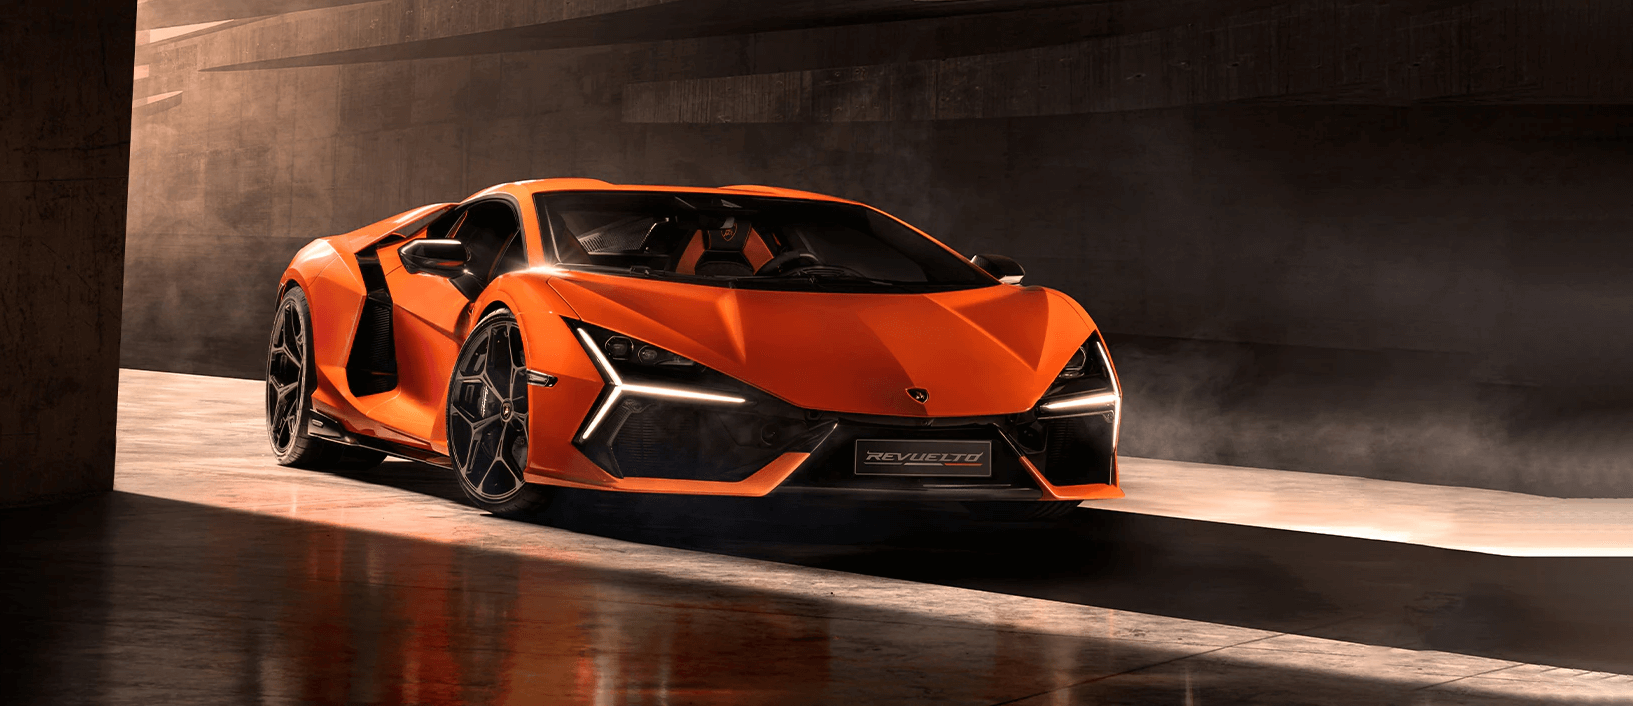 Stunning 2023 Lamborghini Revuelto in motion, showcasing its aerodynamic design and futuristic LED headlights